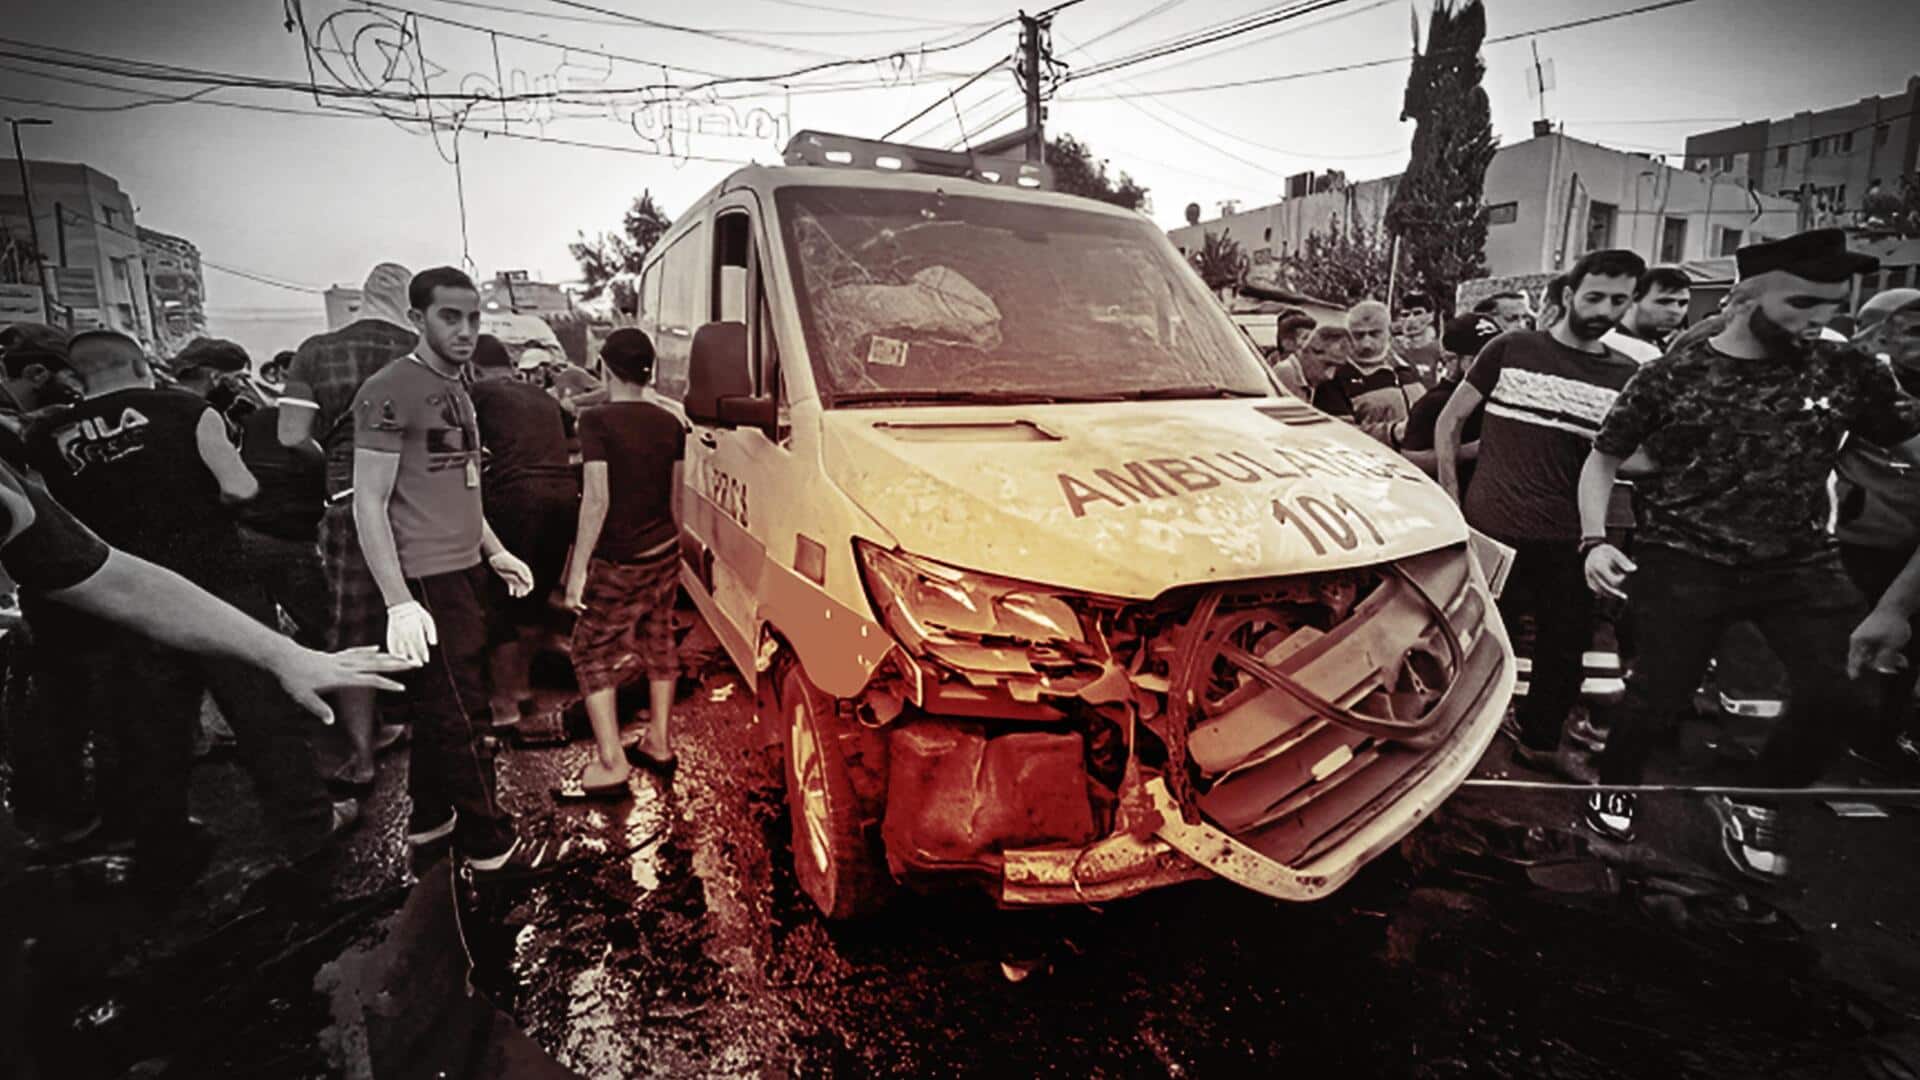 Israel airstrikes ambulance near Gaza hospital, 15 reported dead